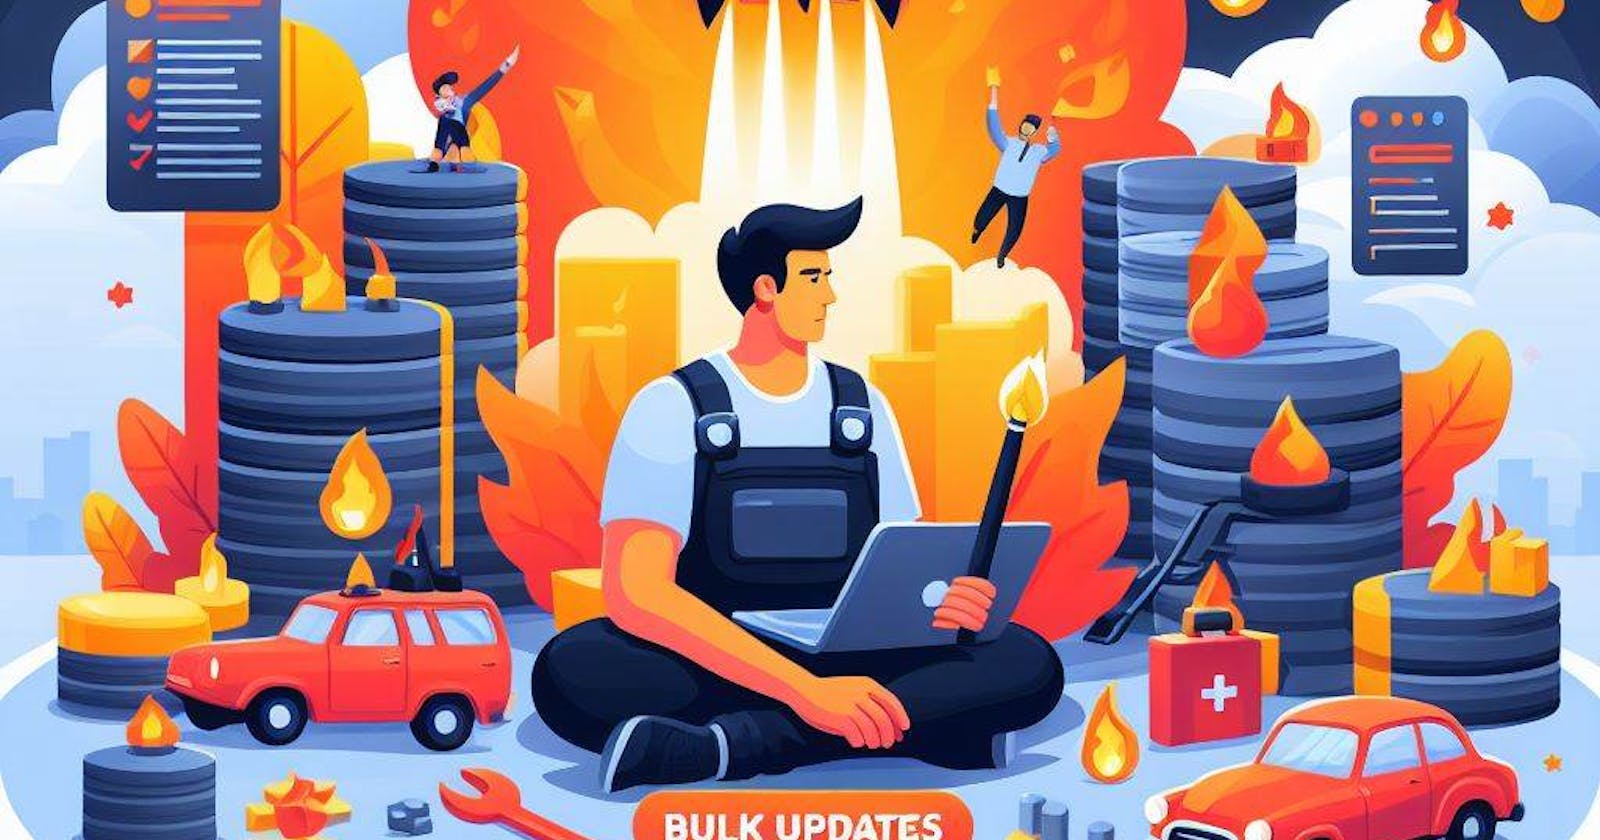 Bulk Updates on Firebase